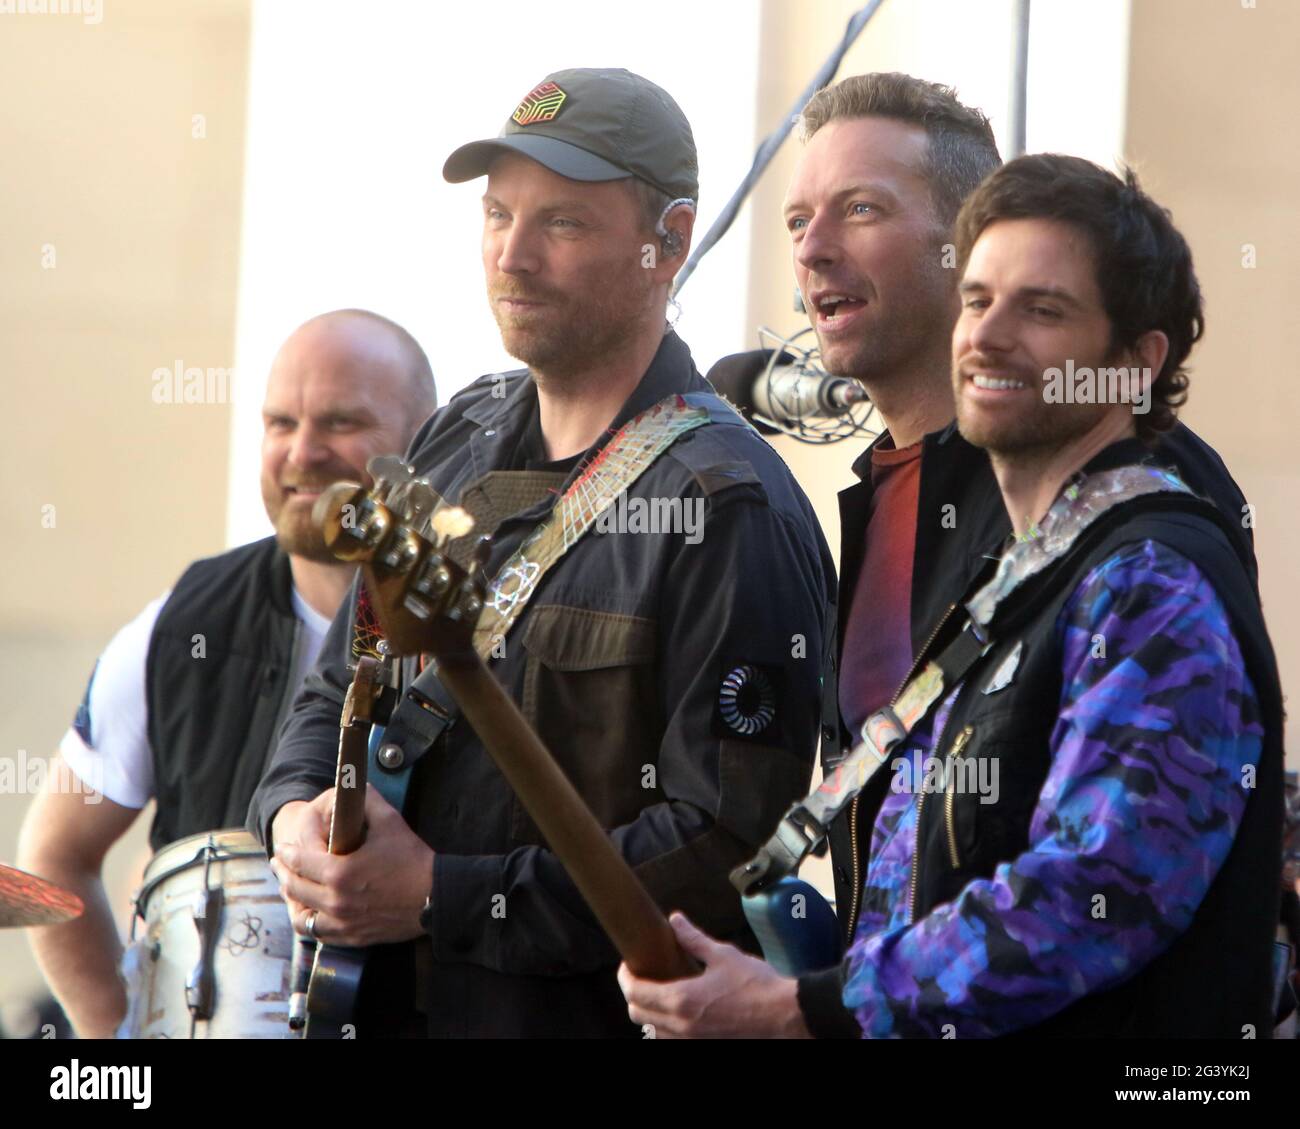 Coldplay (Chris Martin, Will Champion, Jonny Buckland, Guy…